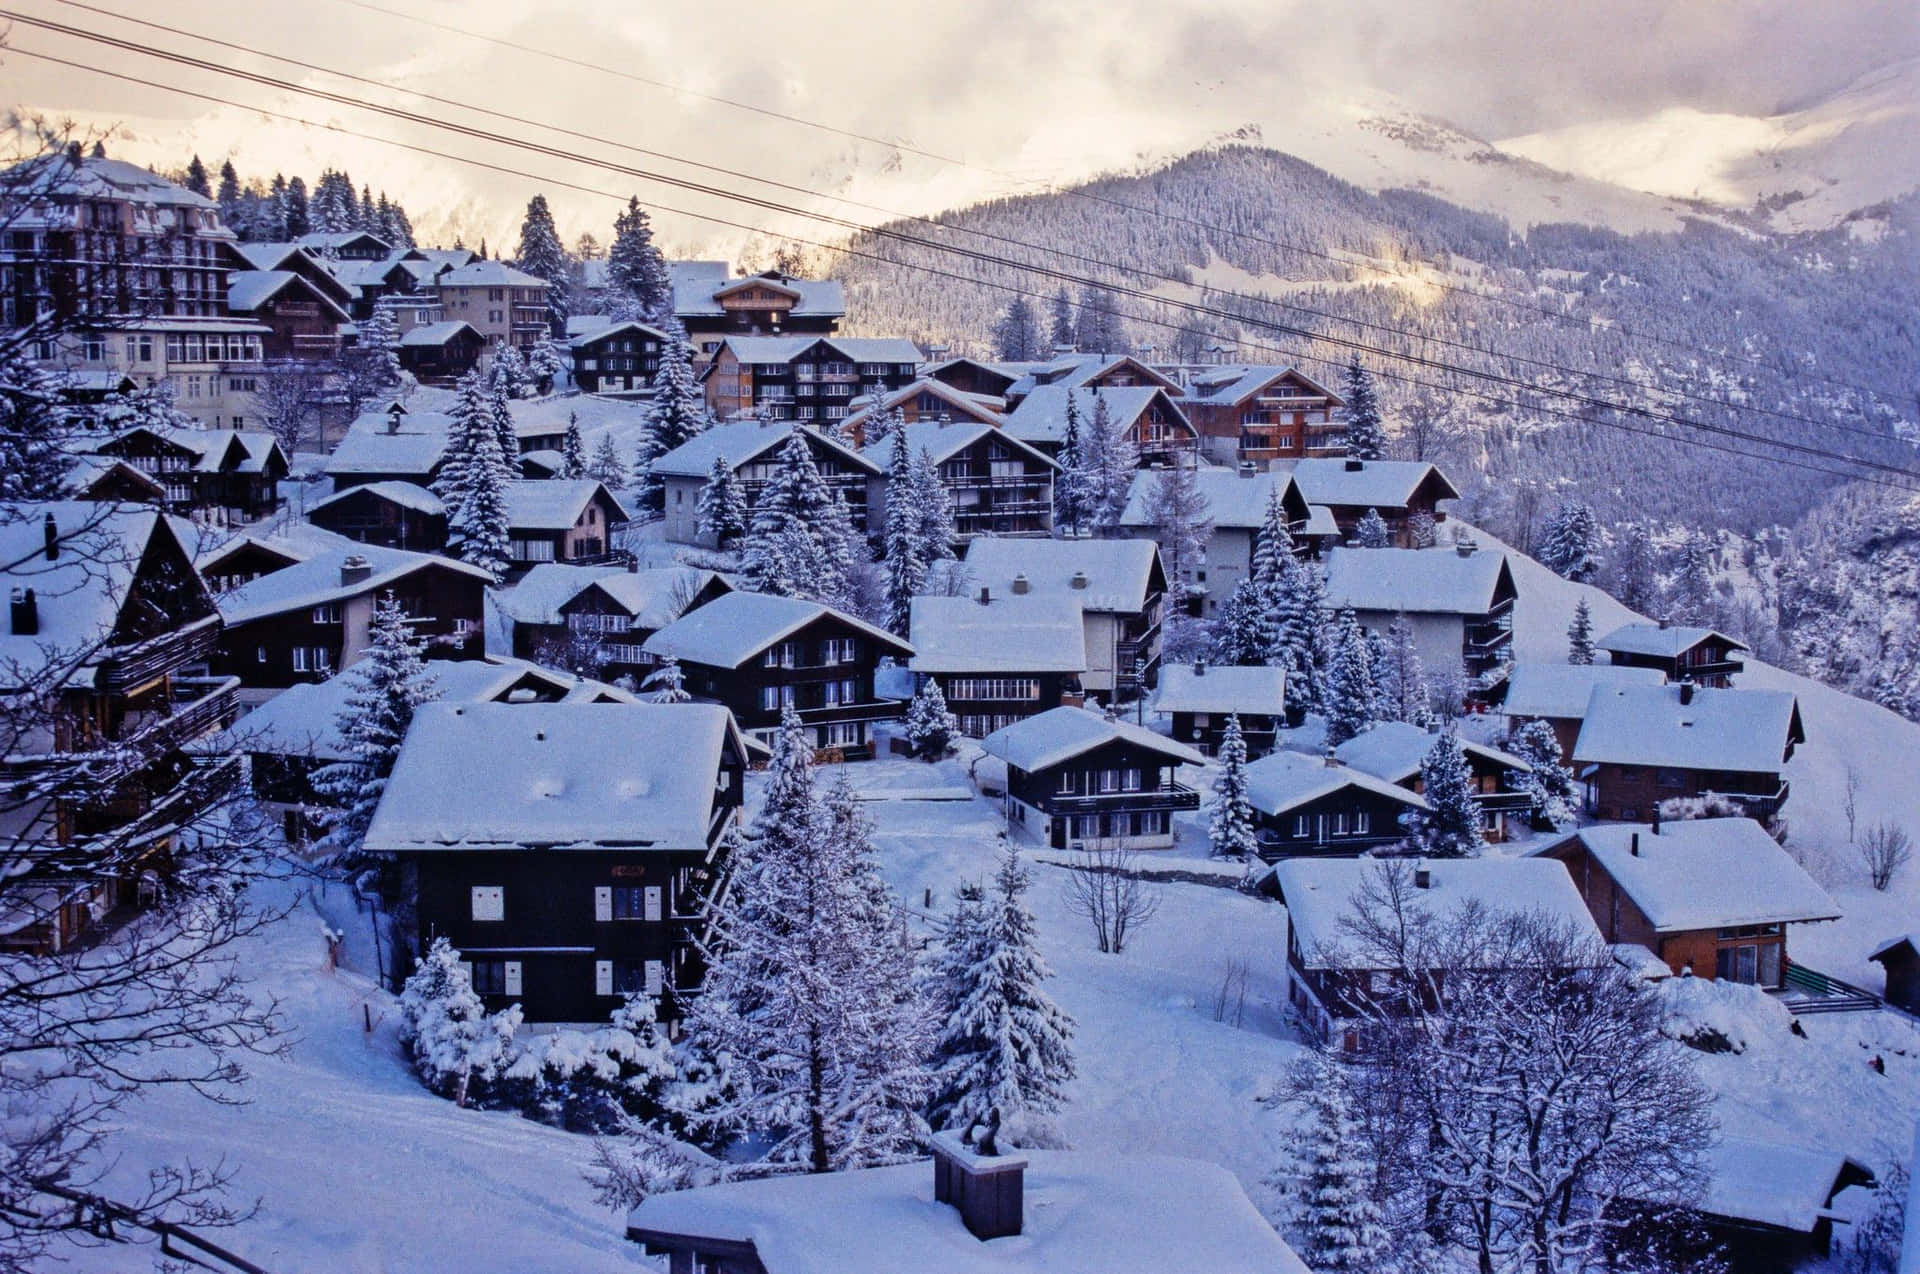 Enchanting Snowy Village at Dusk Wallpaper